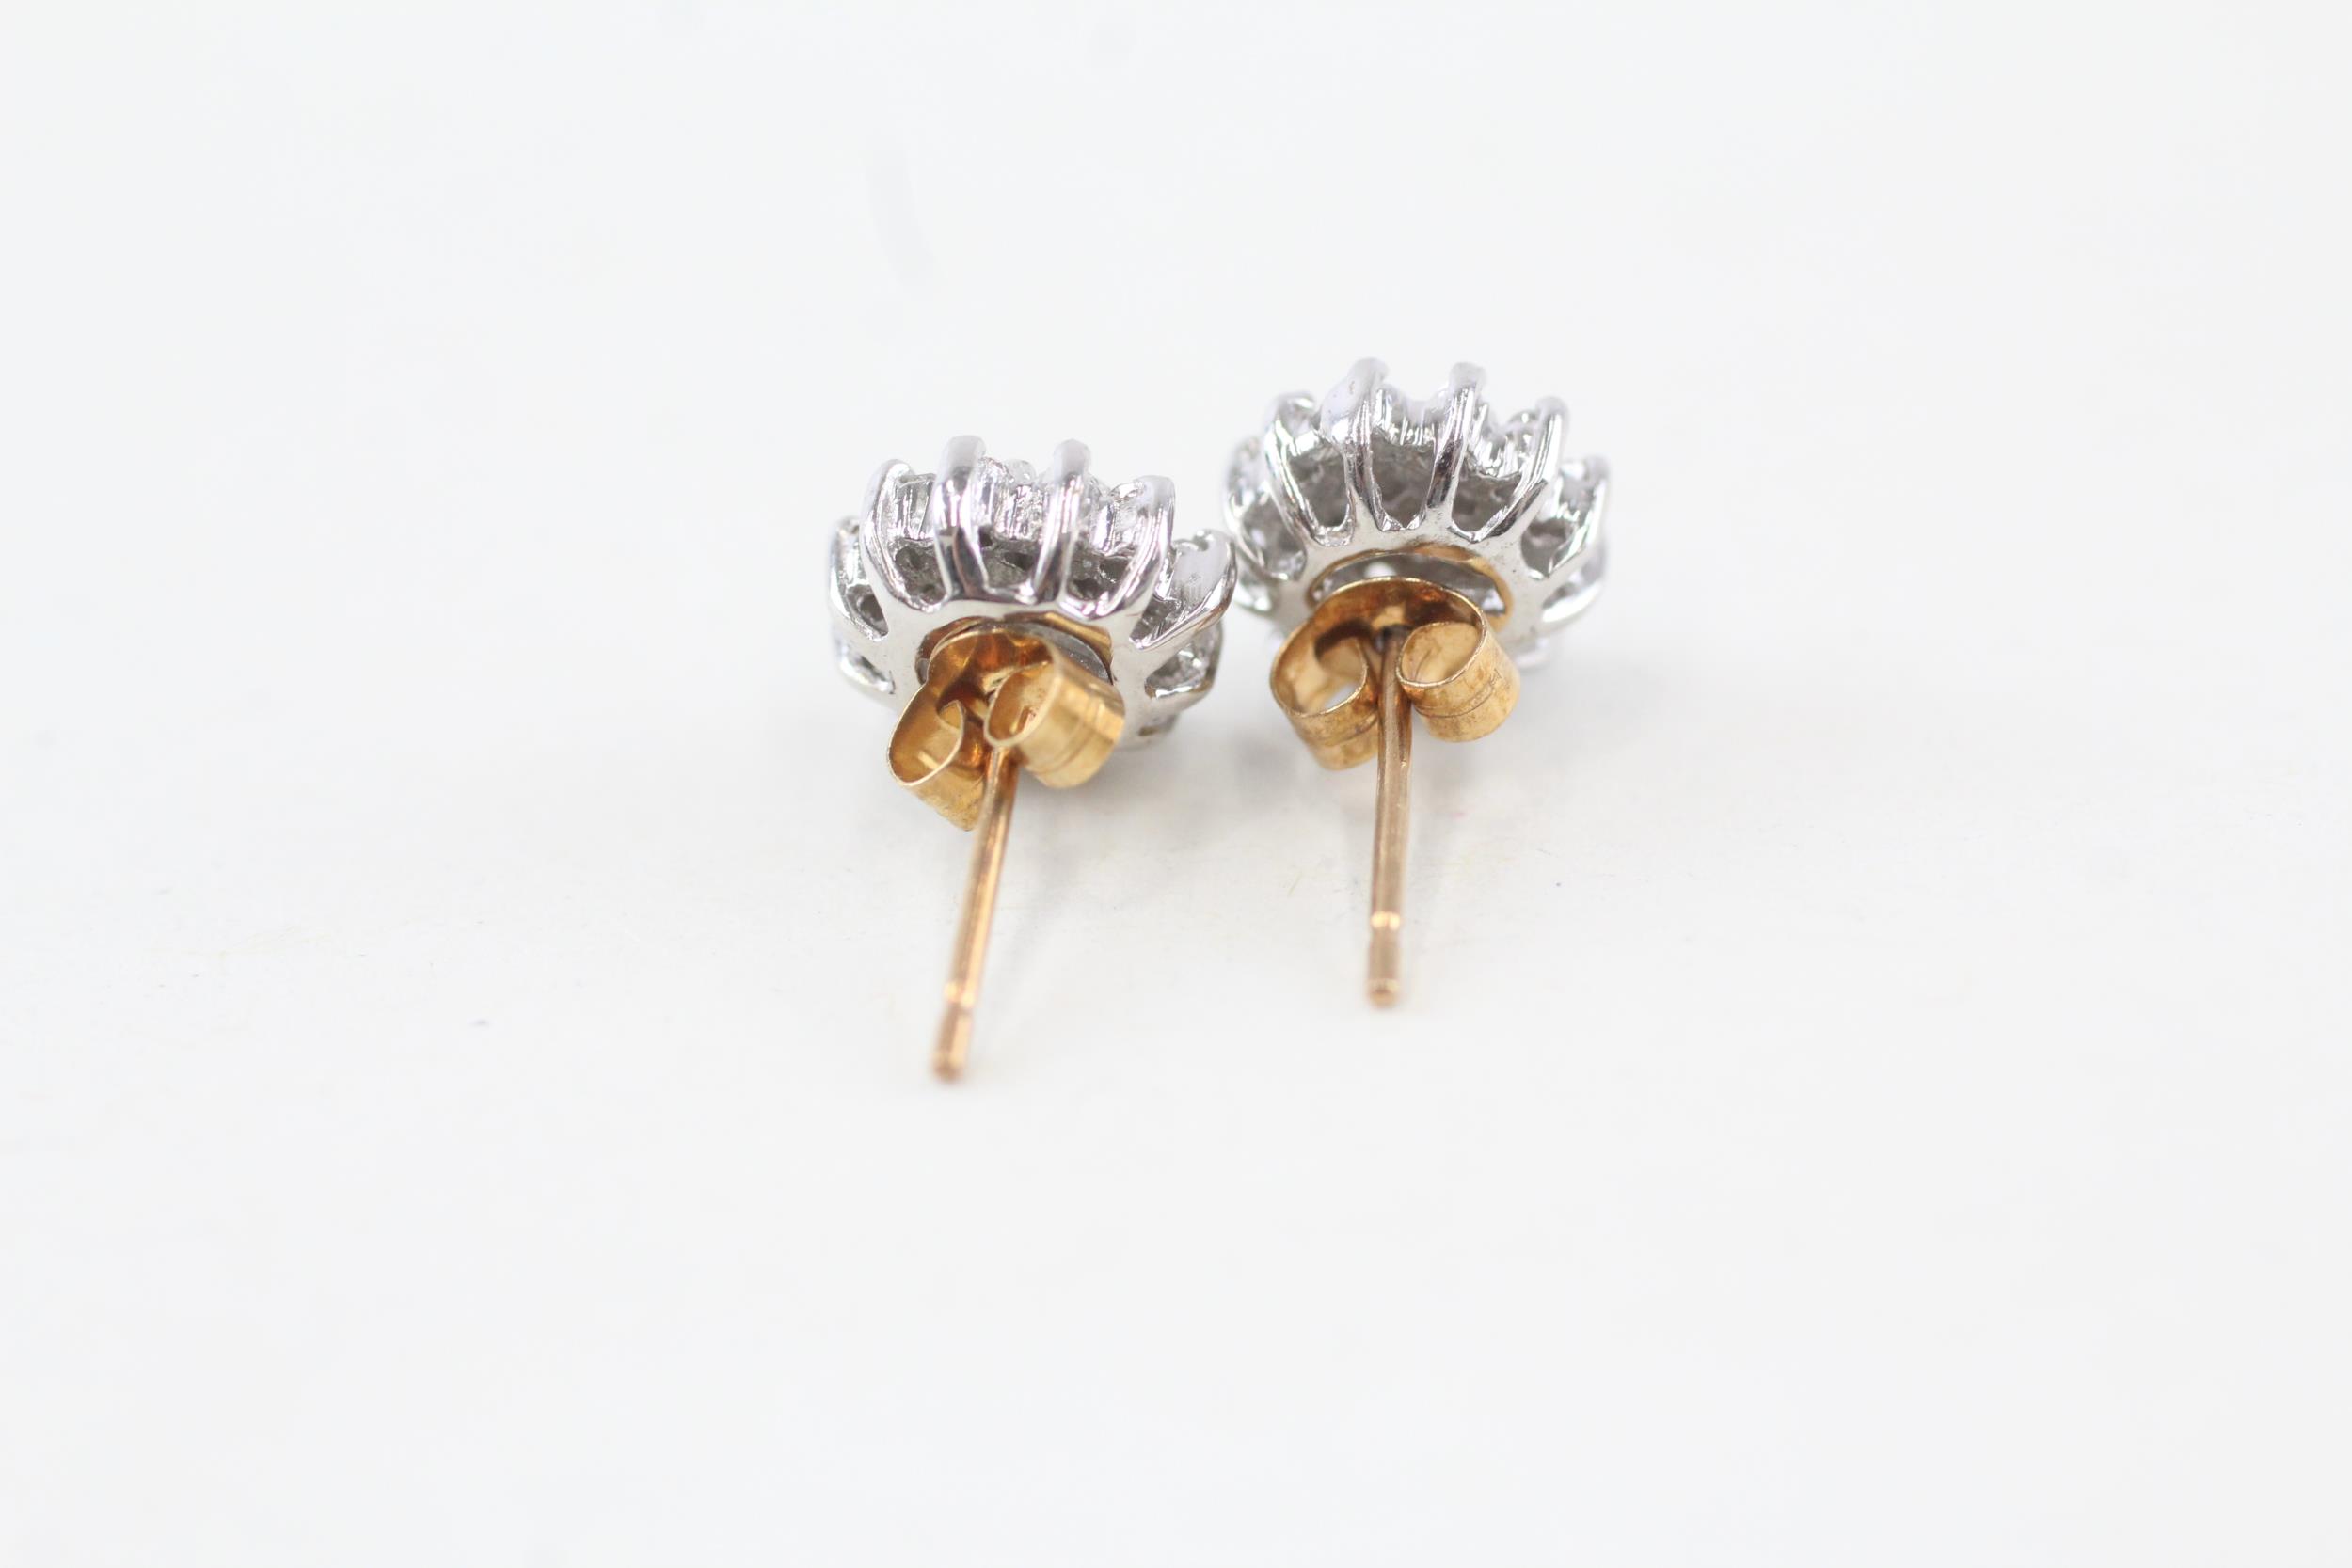 9ct gold diamond set cluster stud earrings - 1.6 g - Image 3 of 4